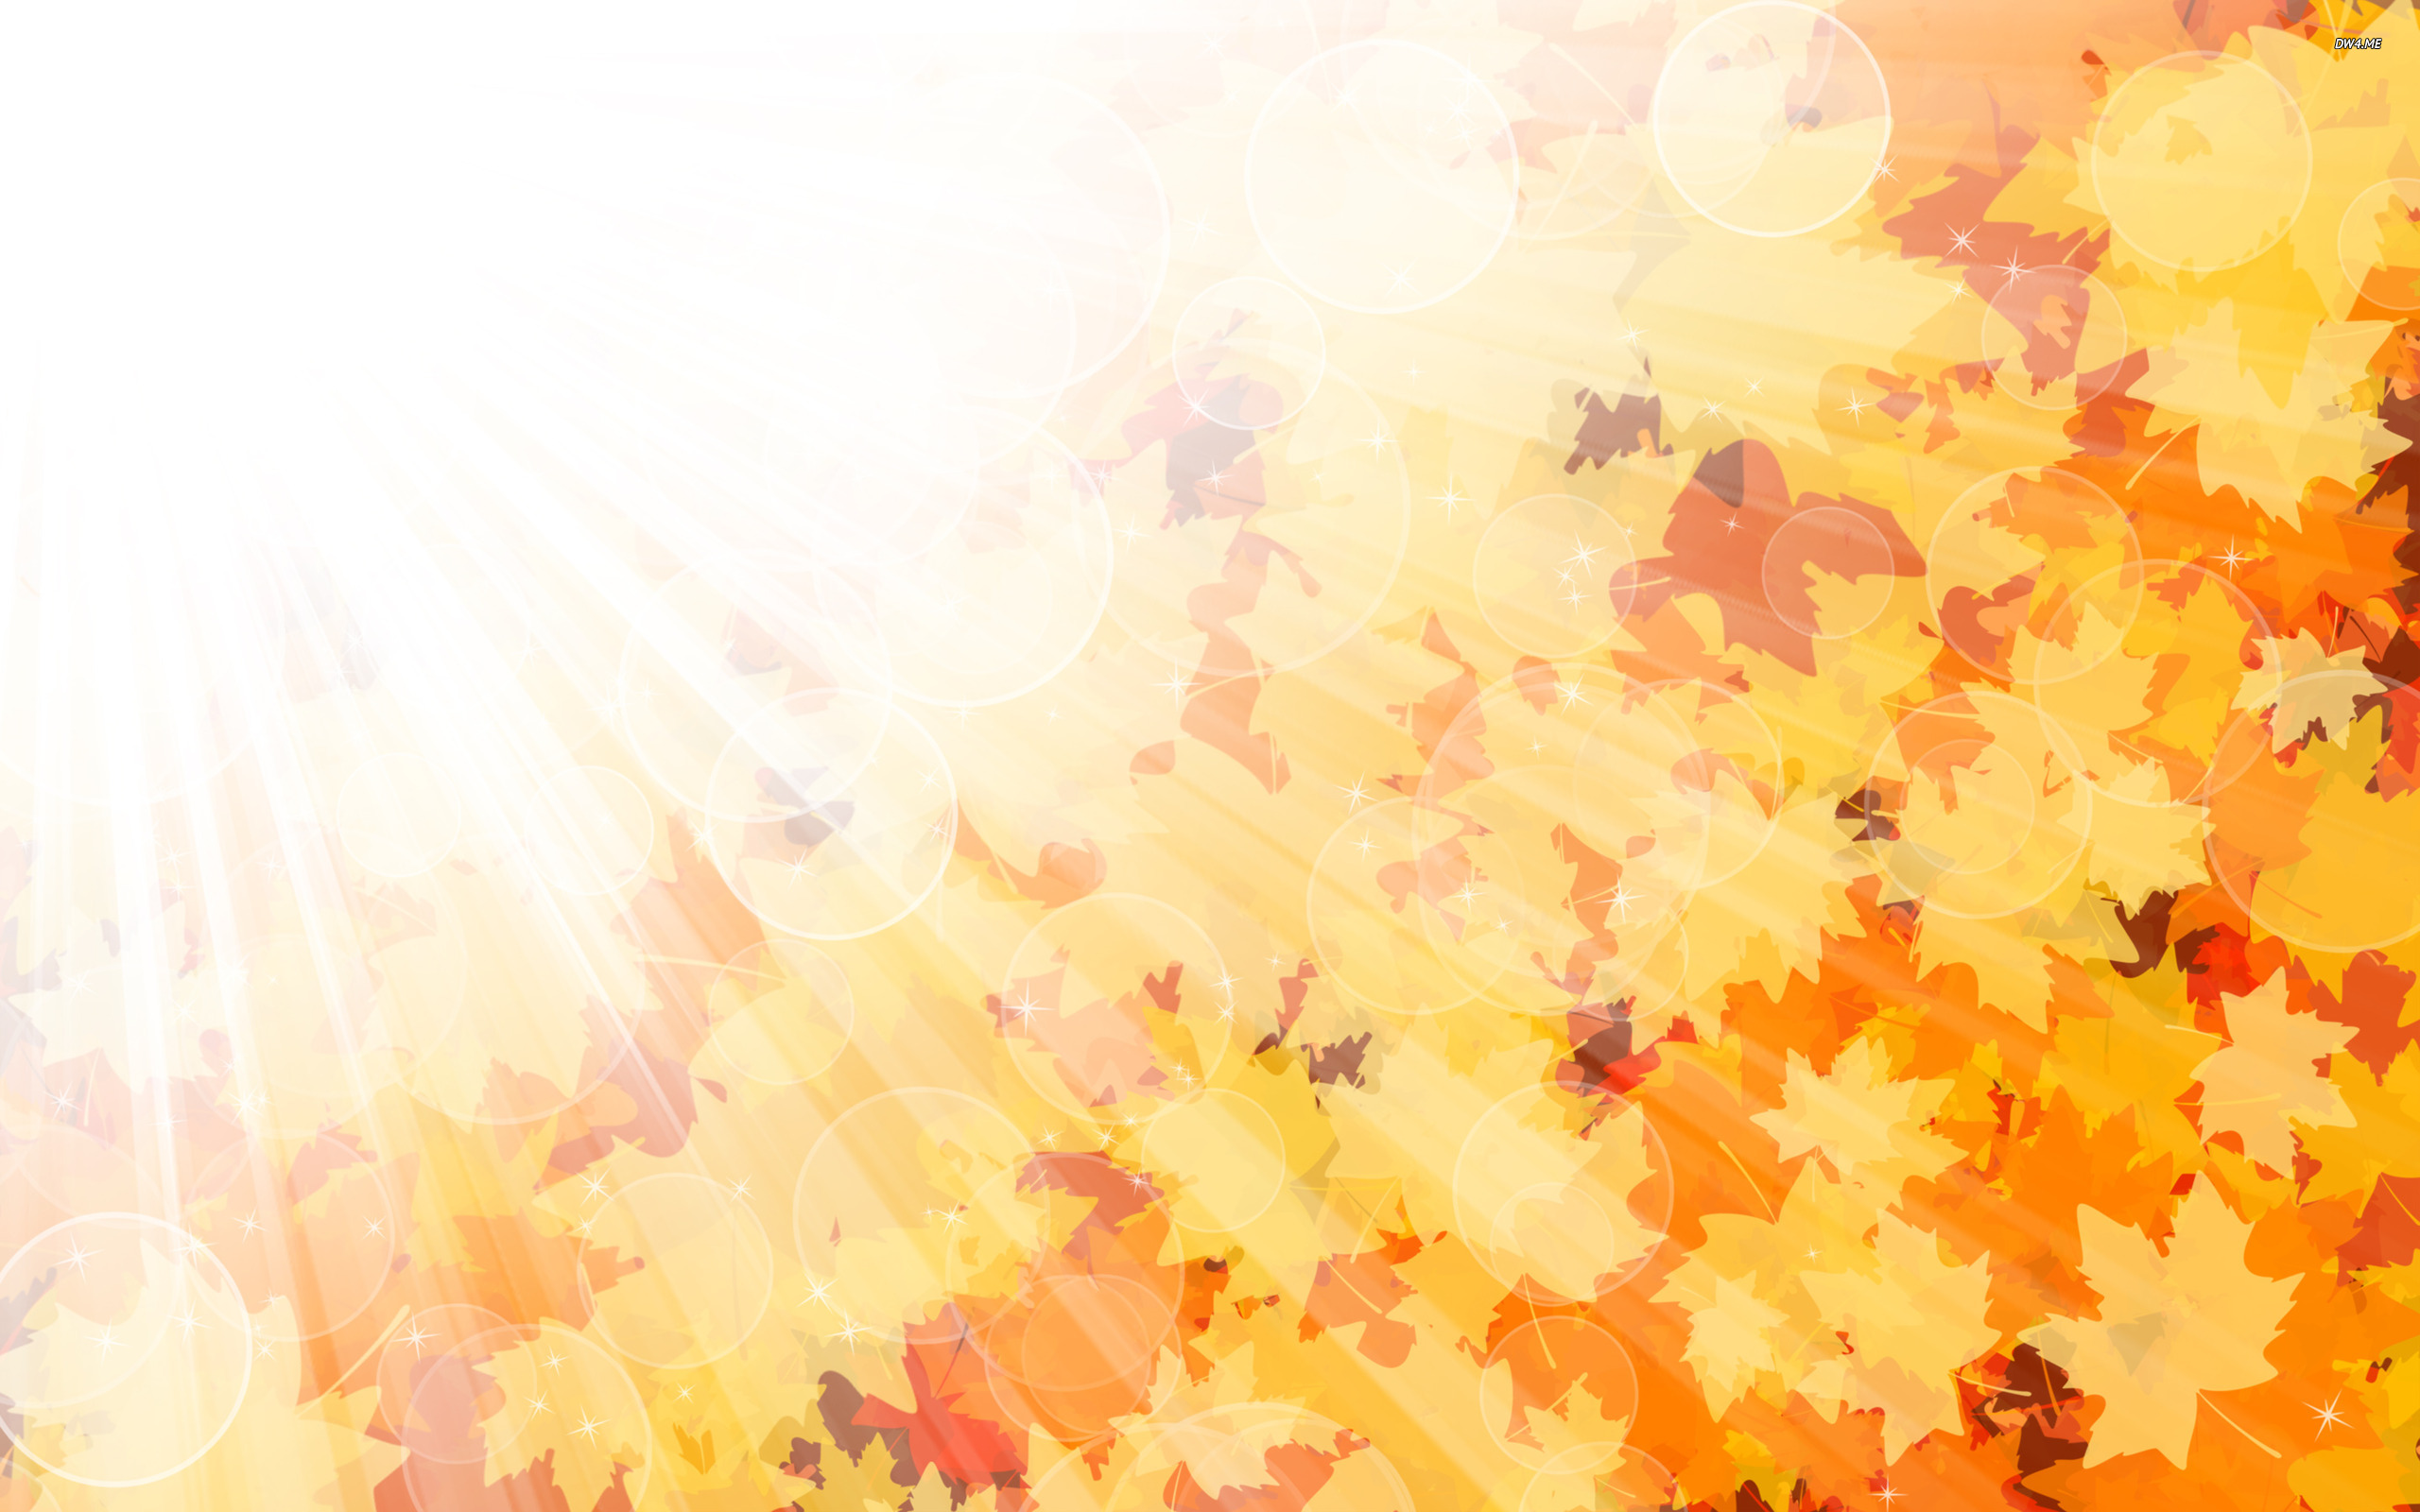 Autumn leaves in the sunshine wallpaper - Digital Art wallpapers ...